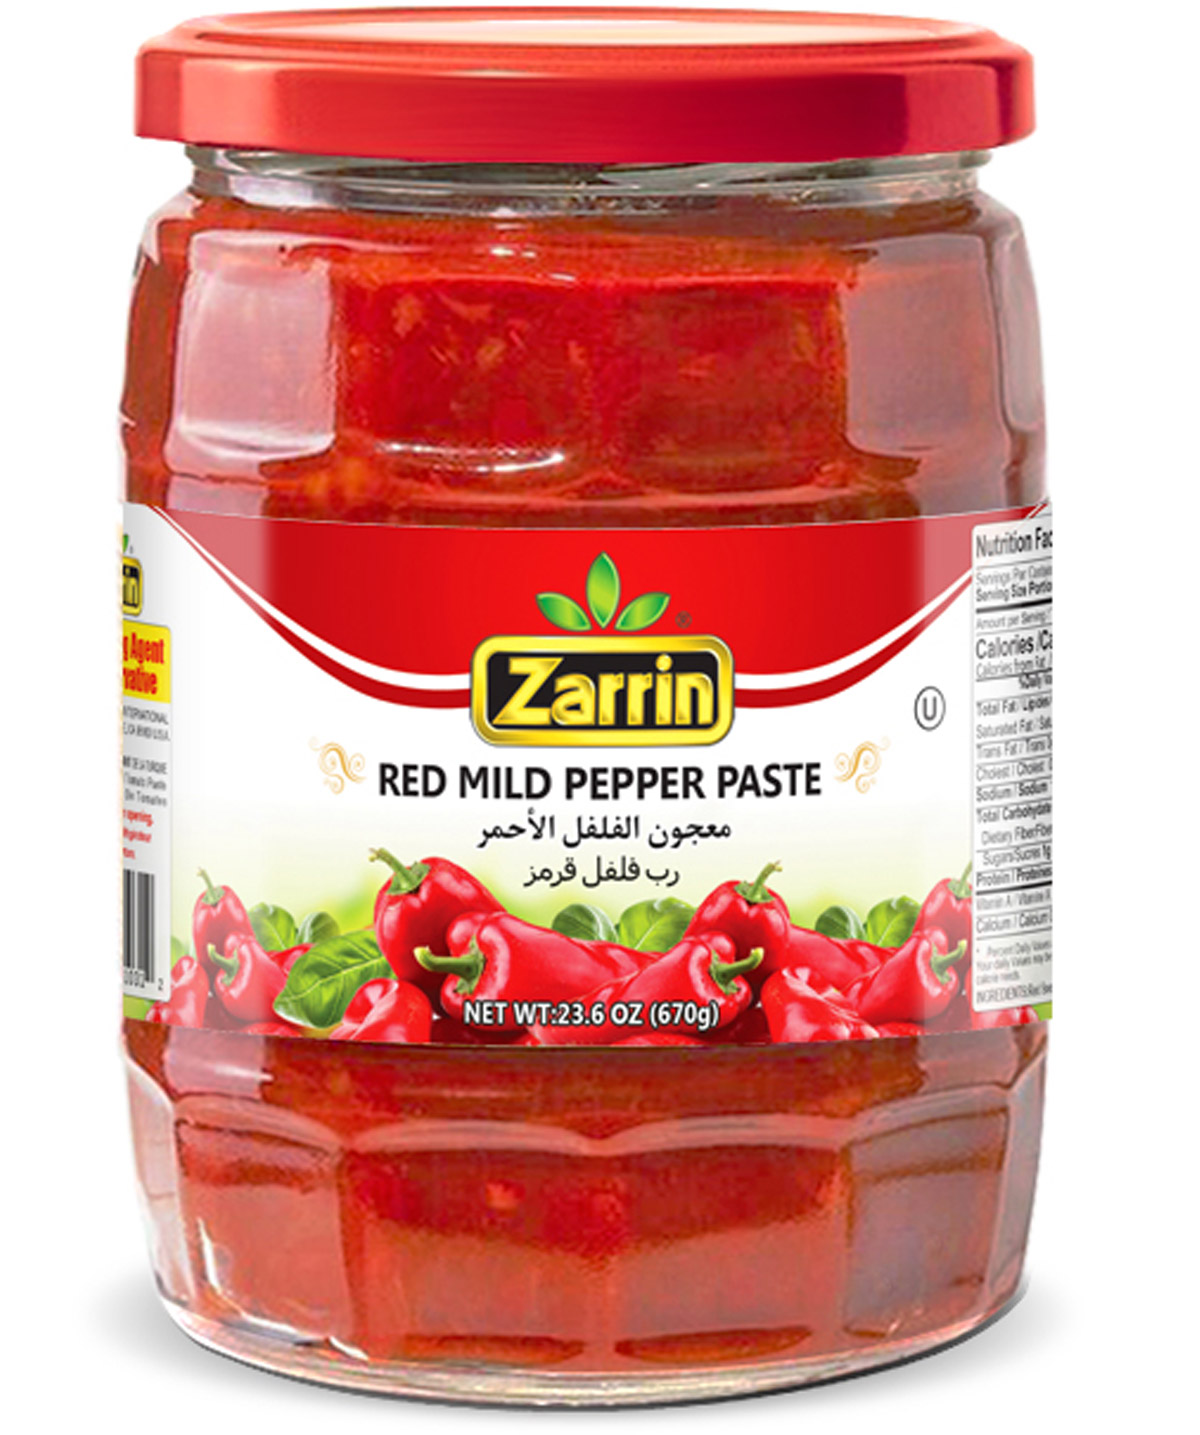 Zarrin Mild Pepper Paste In Glass Jar